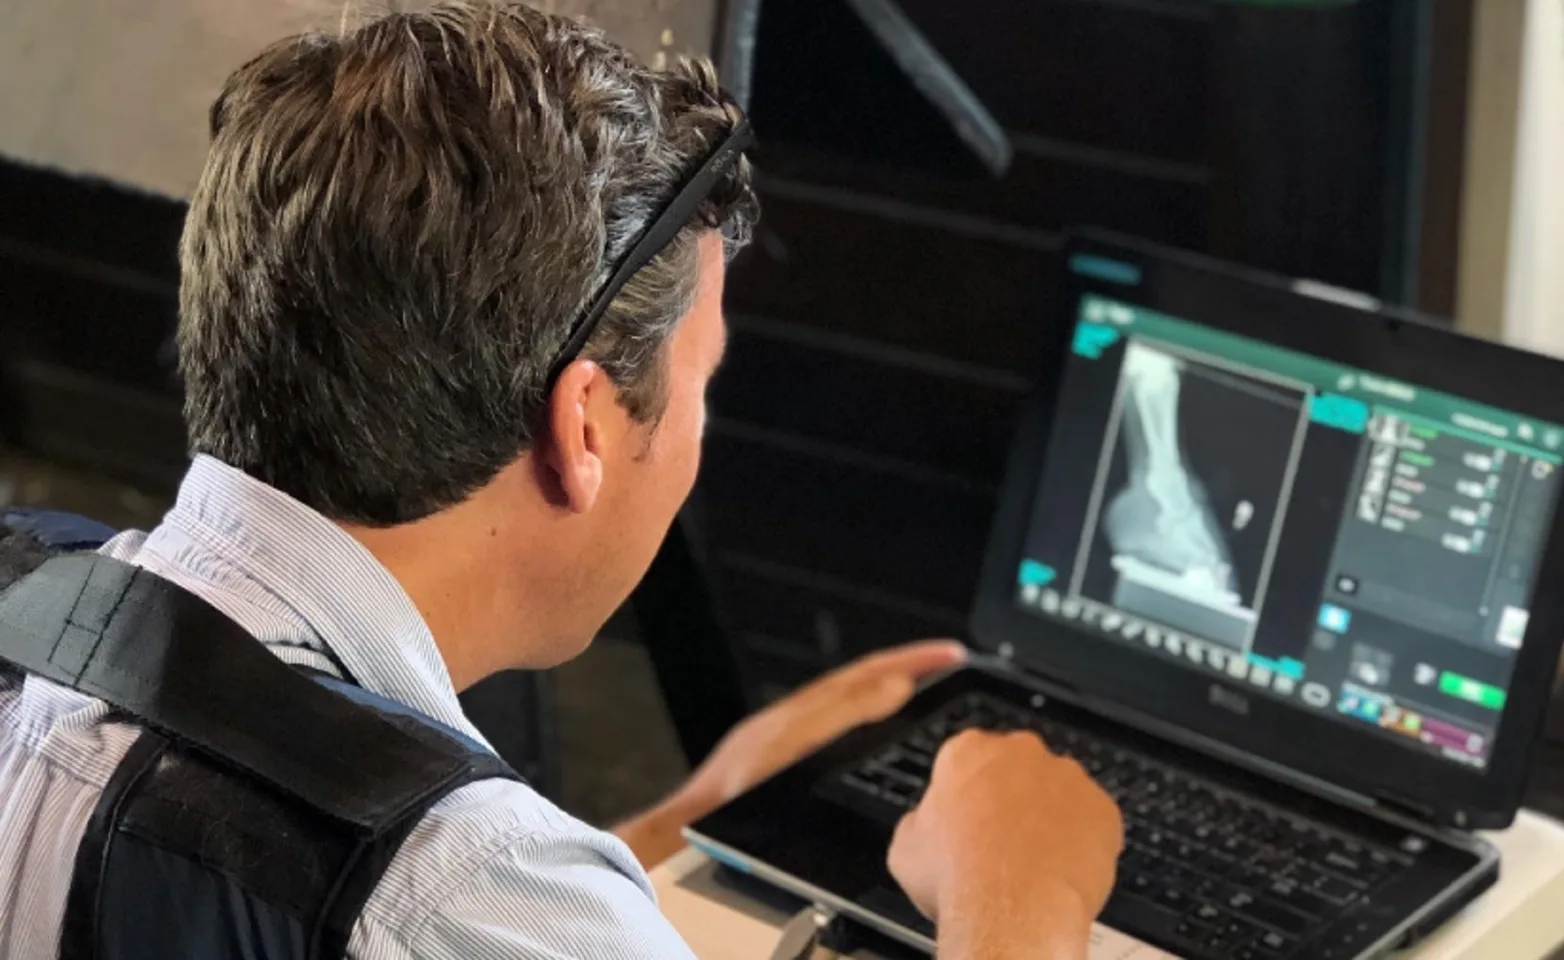 Dr. Isaiah Robinson views hoof radiographs on a laptop